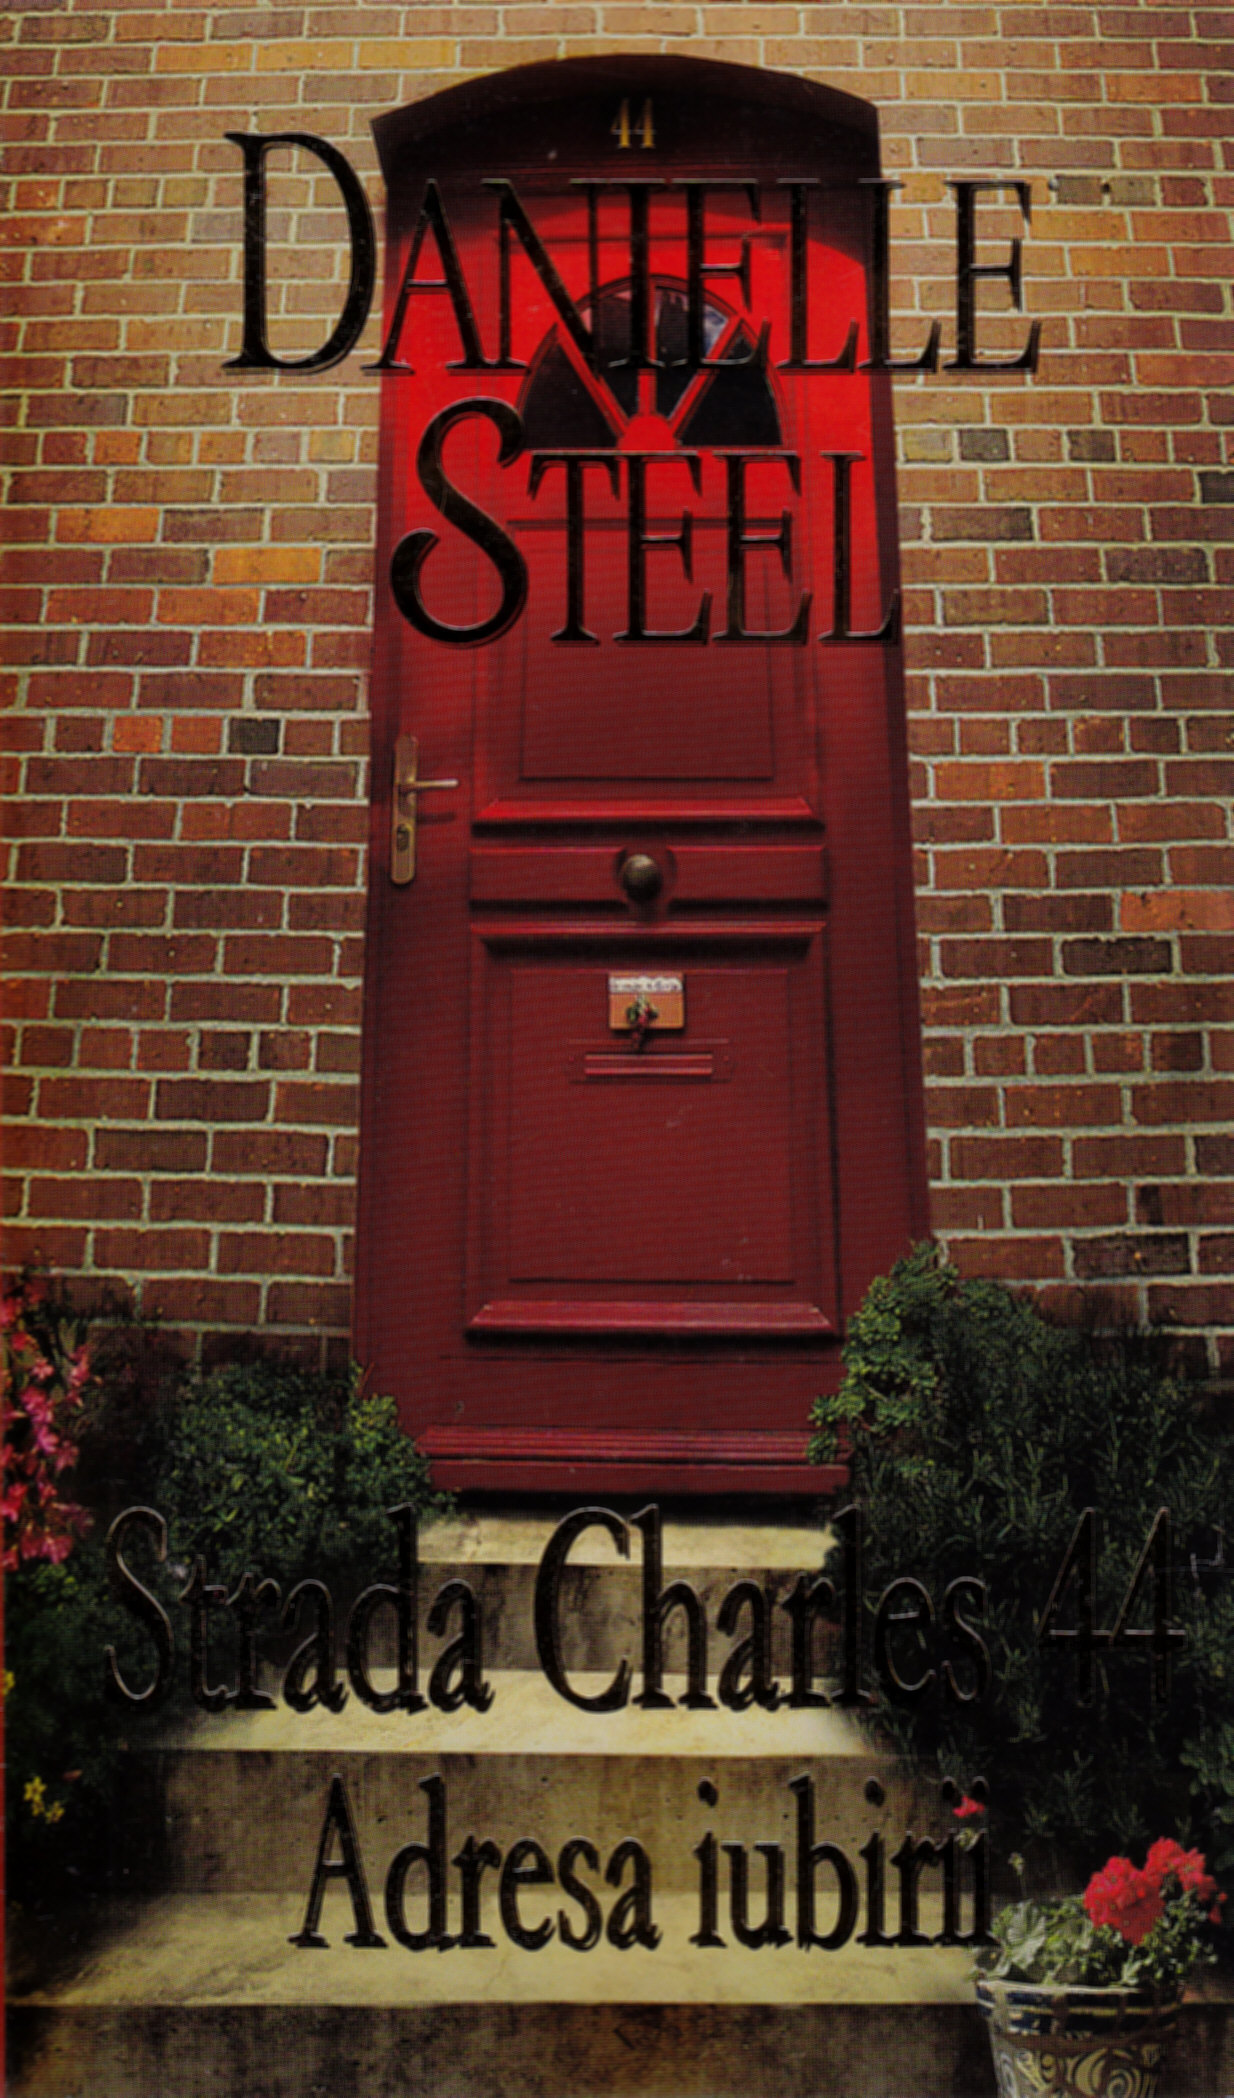 Strada Charles 44, Adresa Iubirii - Danielle Steel